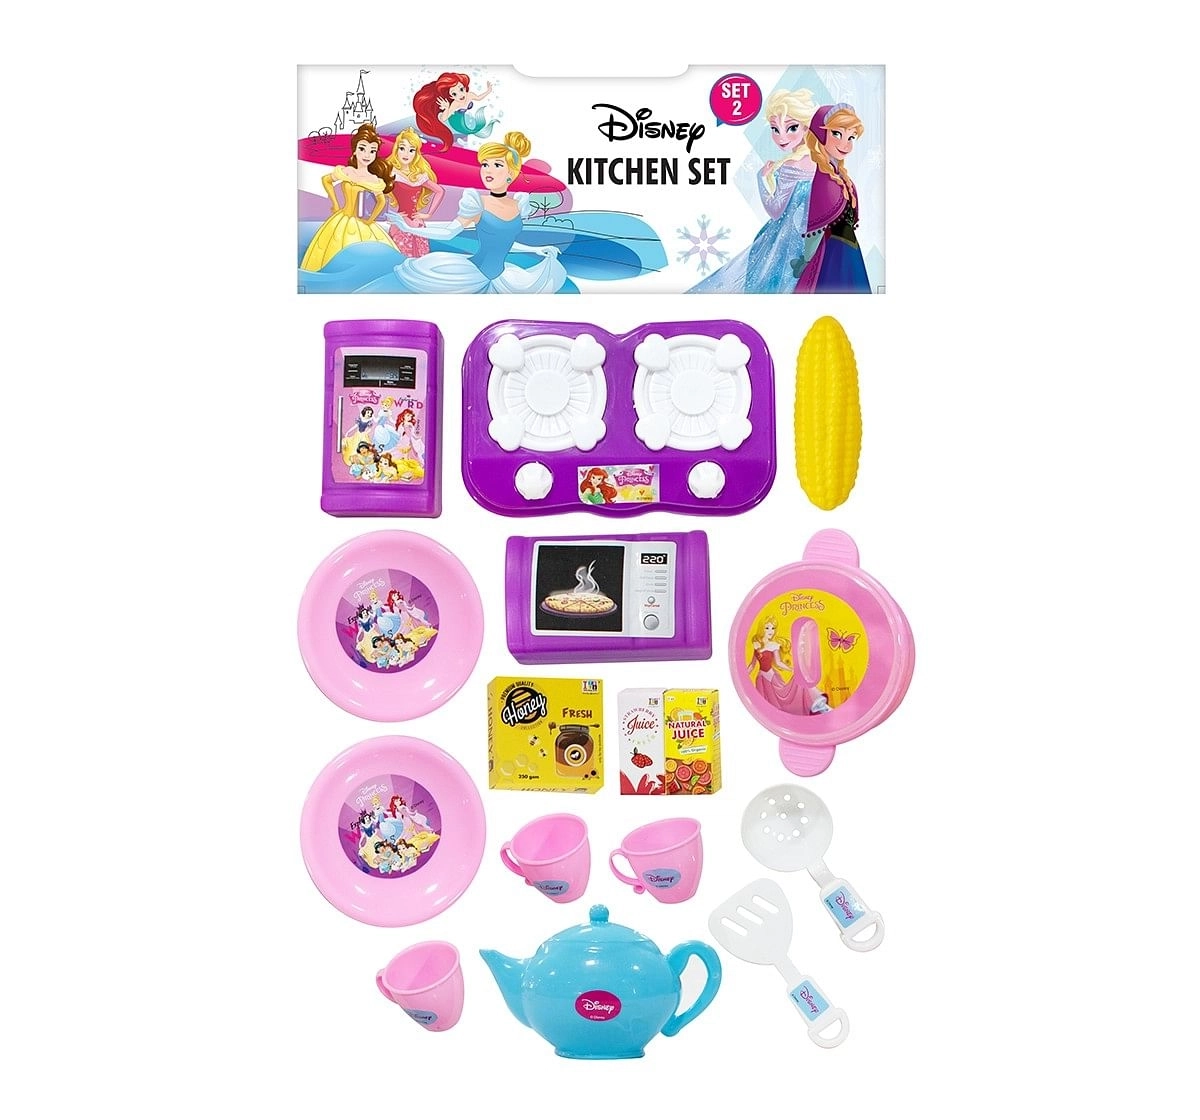 Disney Princess Kitchen set of 16 pcs. role play toys for kids, 3Y+